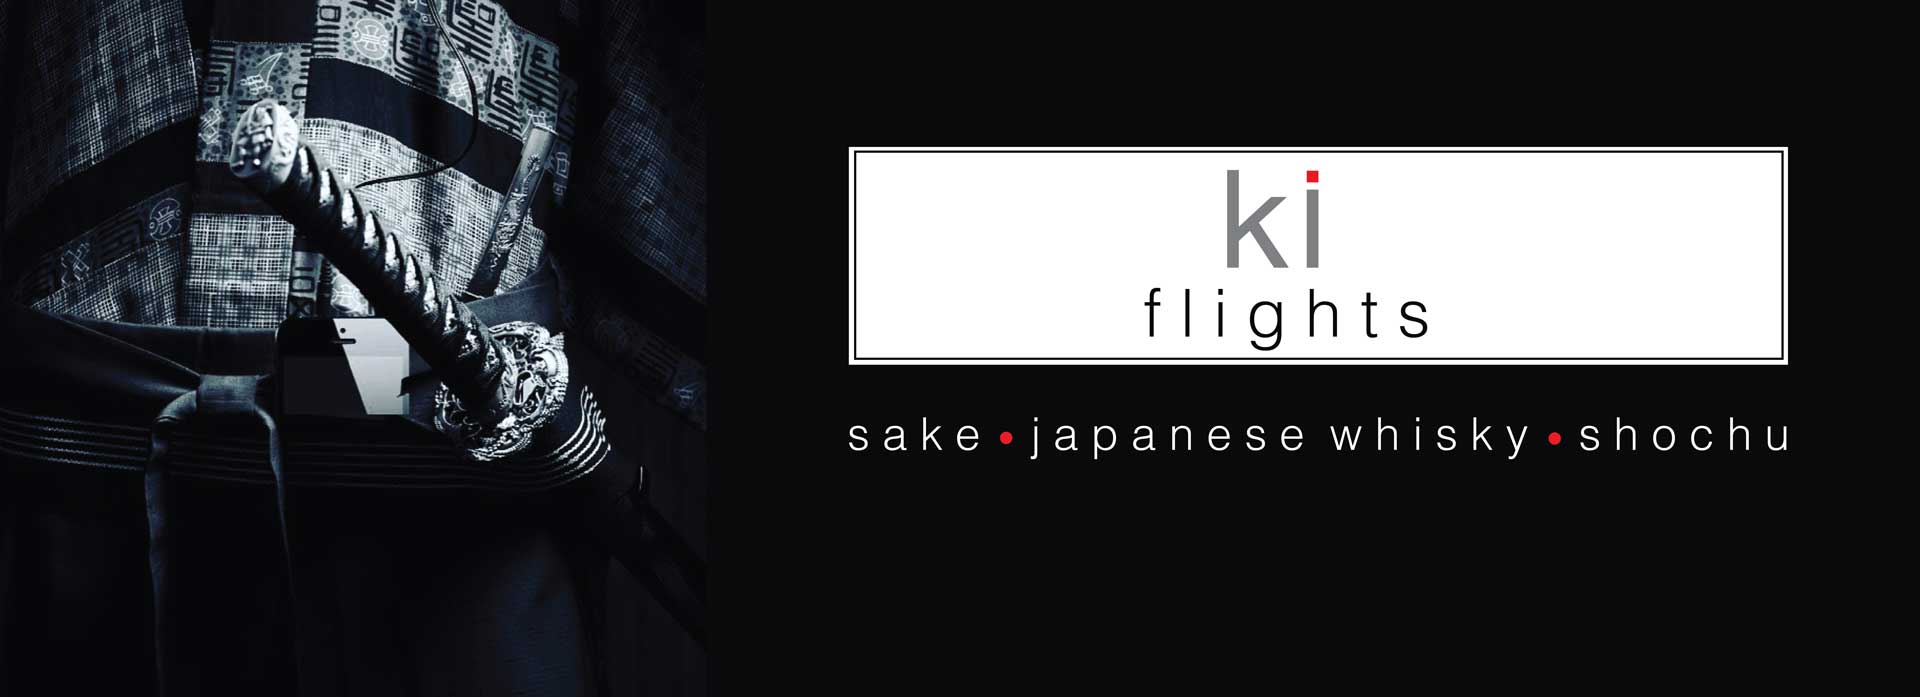 Ki flights